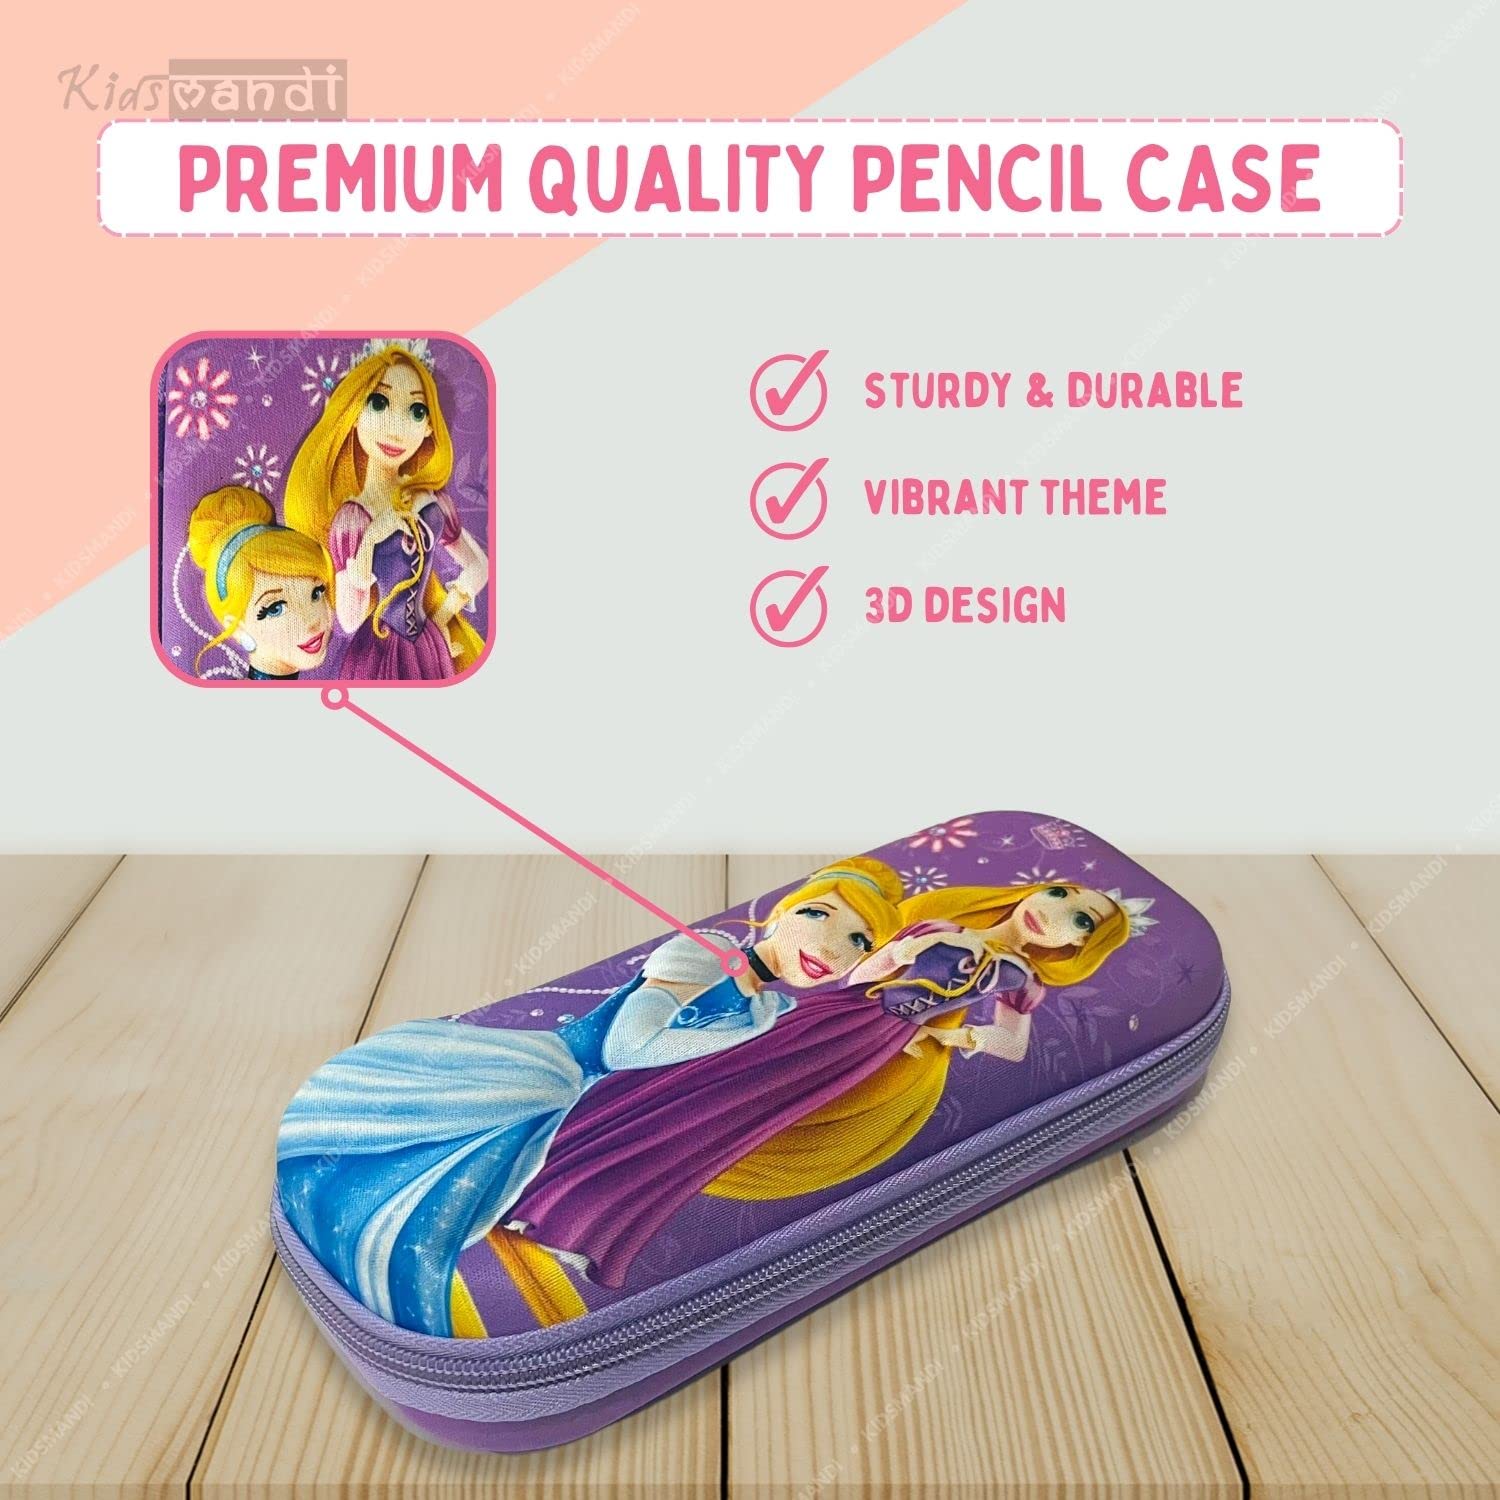 Kids Mandi 3D design Eva pencil case with mesh compartment